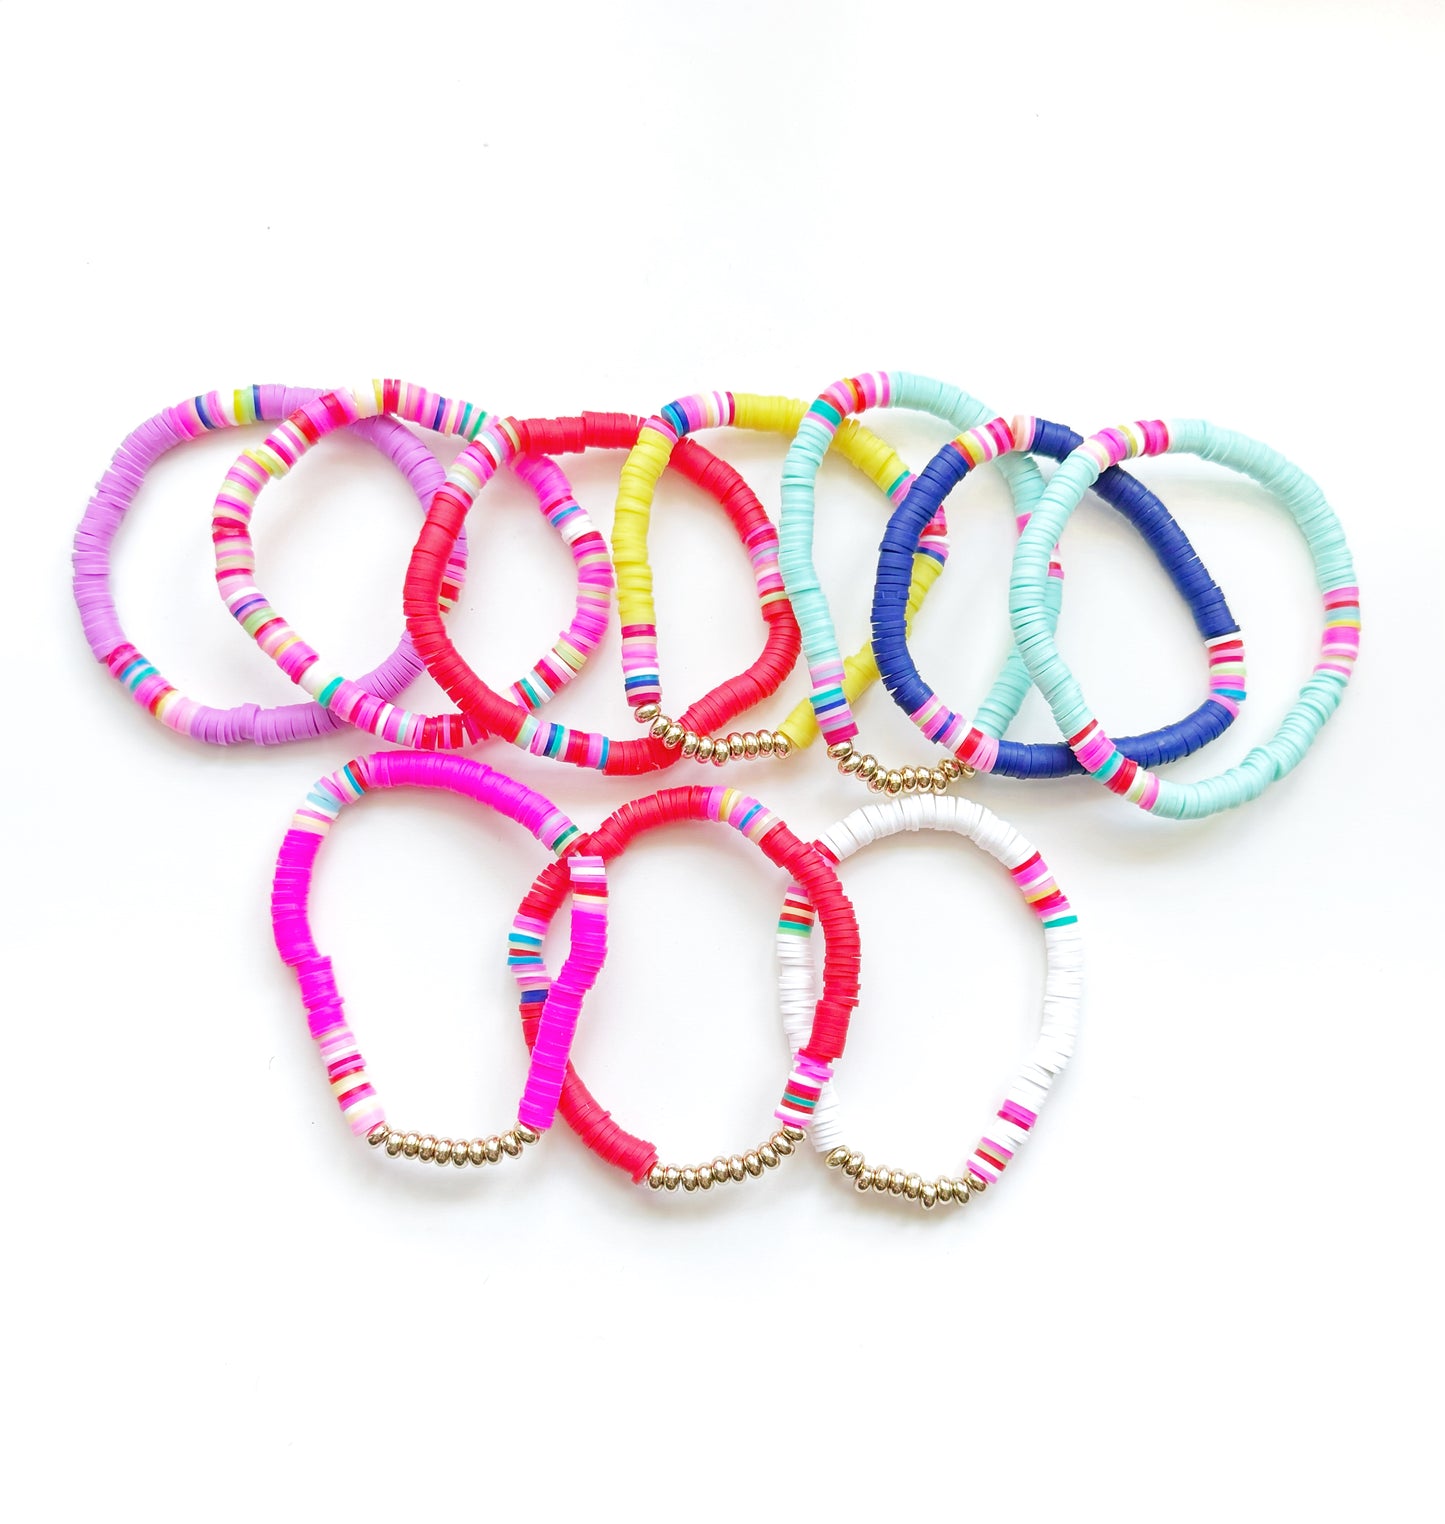 Colorful Friendship Bracelet 10-Pack